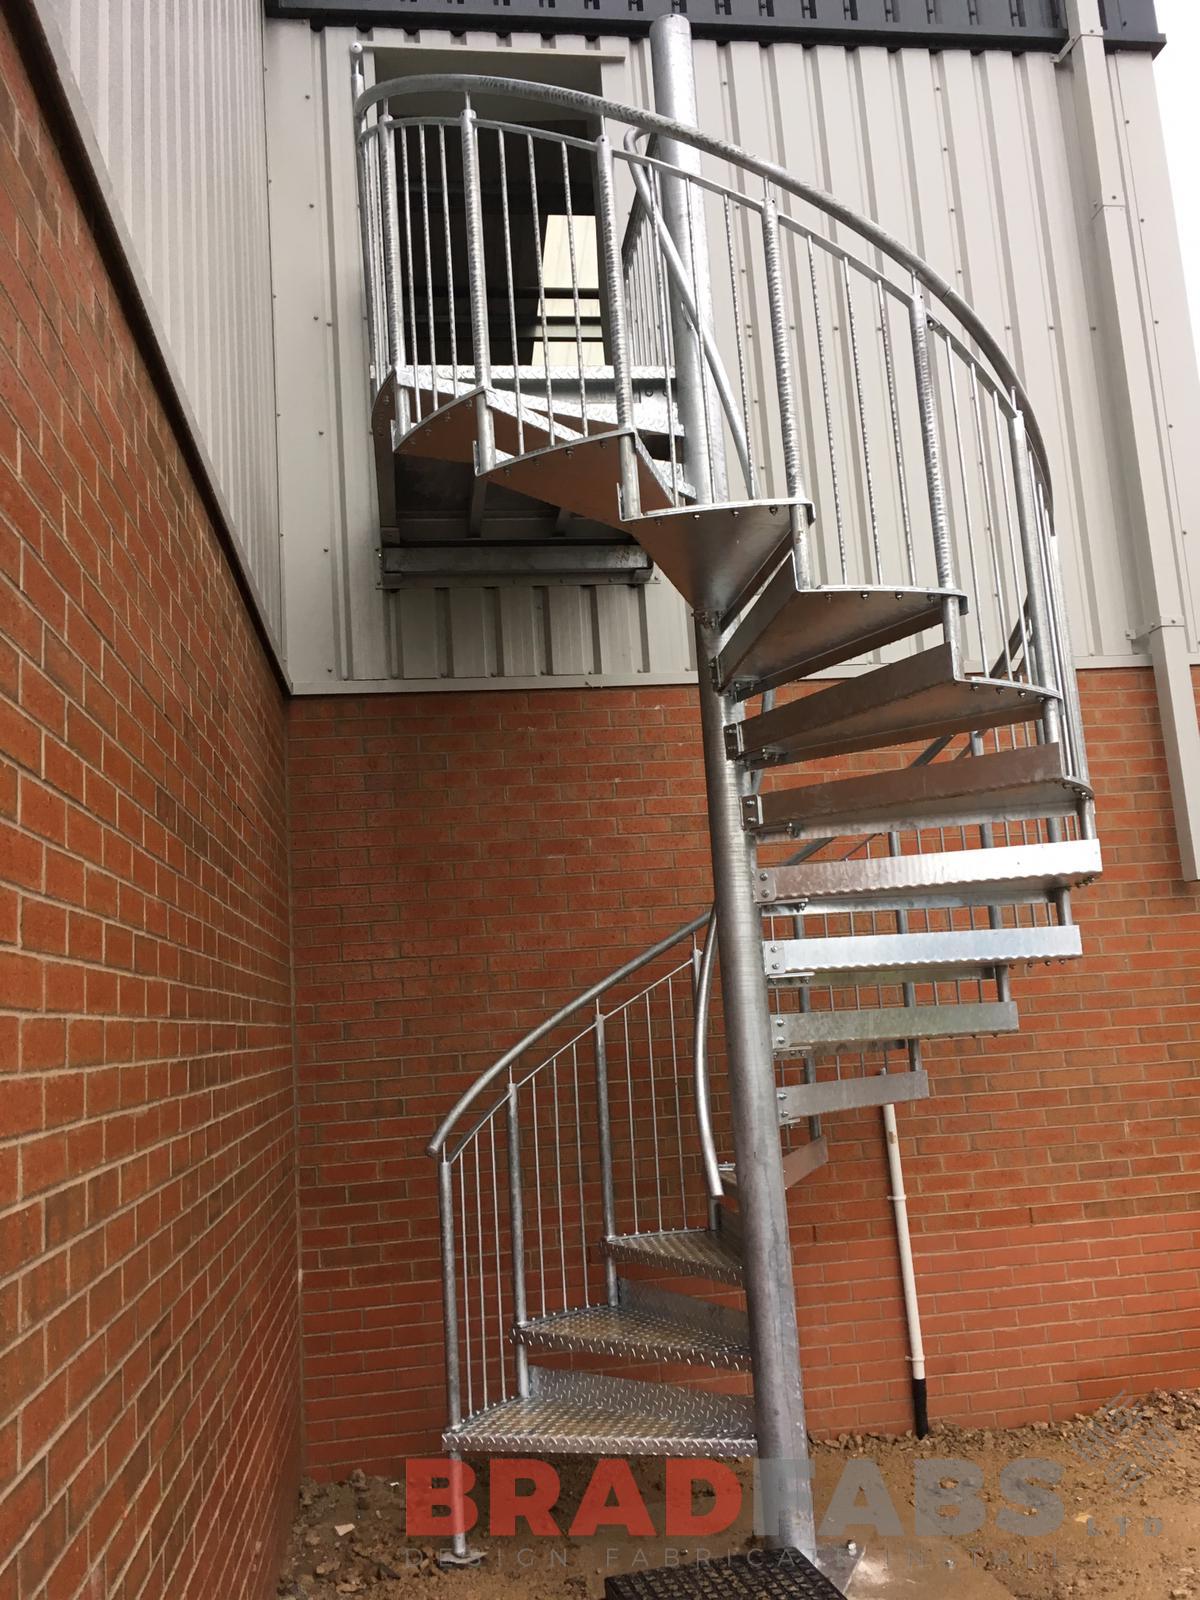 Mild steel and galvanised bespoke spiral fire escape by Bradfabs Ltd